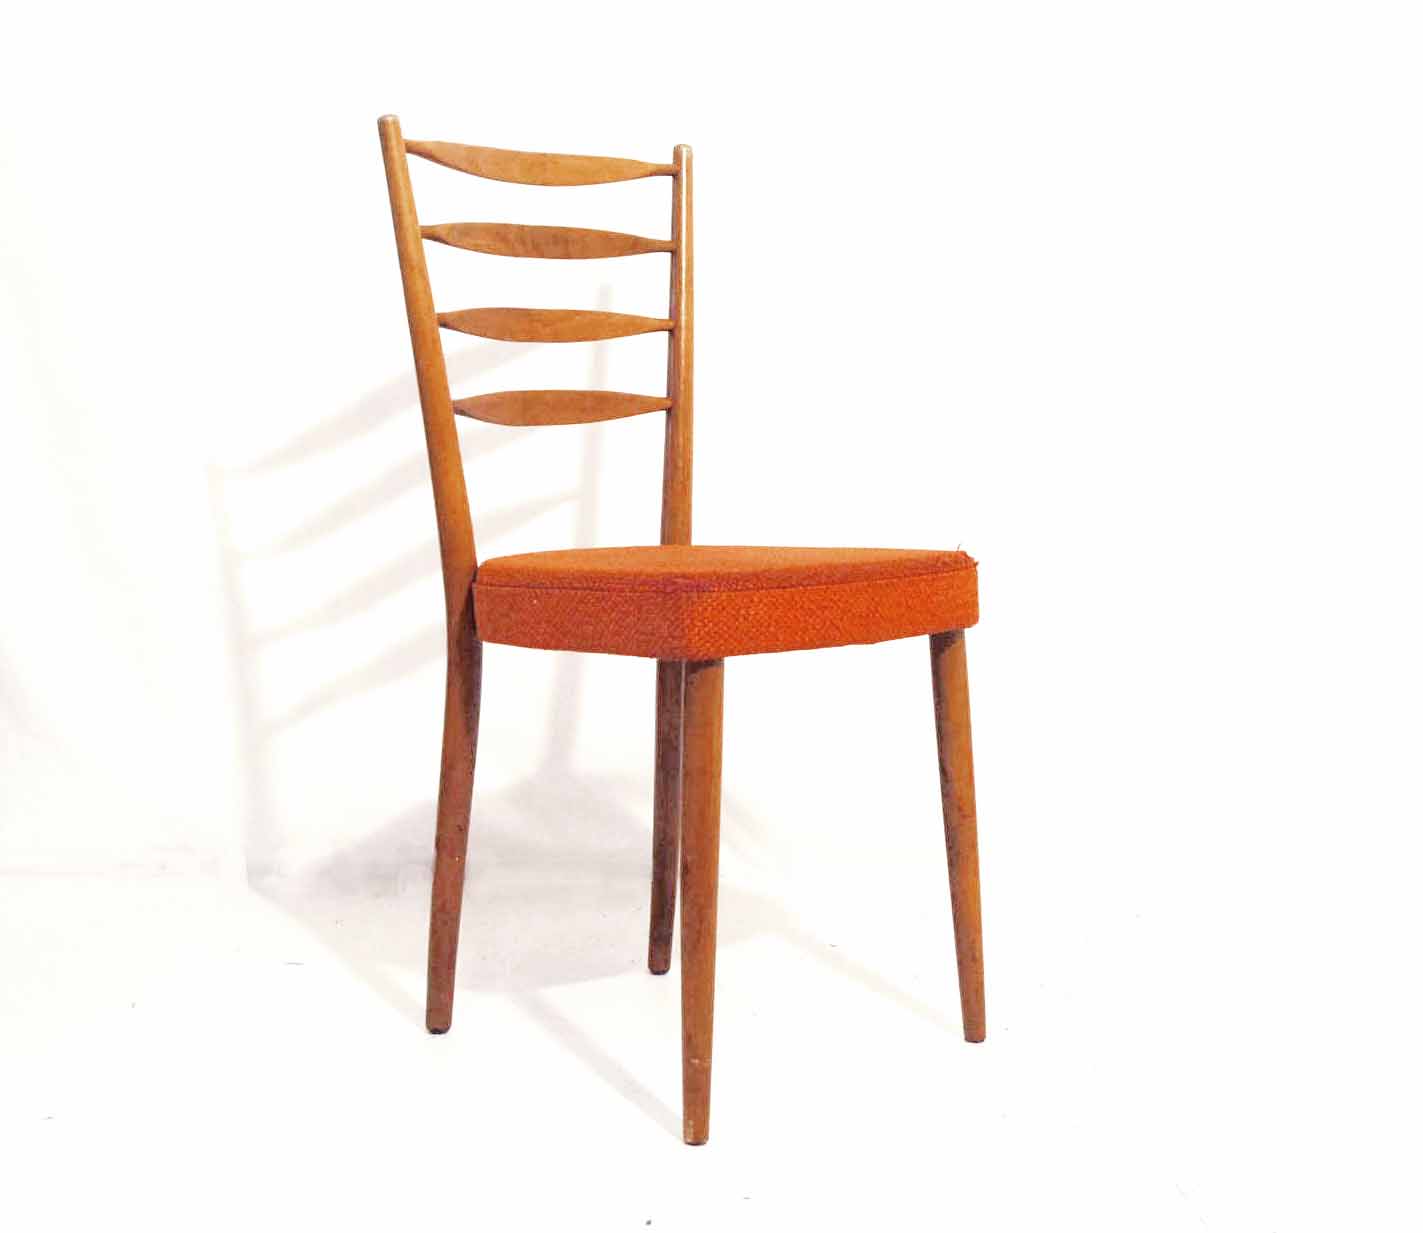 stevensstoel3 Jaren 50 retro pastoe stoel oranjeShop for Design, design, 2e hands meubels, 2e hands design,  vintage, retro, jaren 50, jaren 60, mid-century, jaren 70, jaren 80, jaren 90, deens design, stoelen, stoel, stevens, pastoe